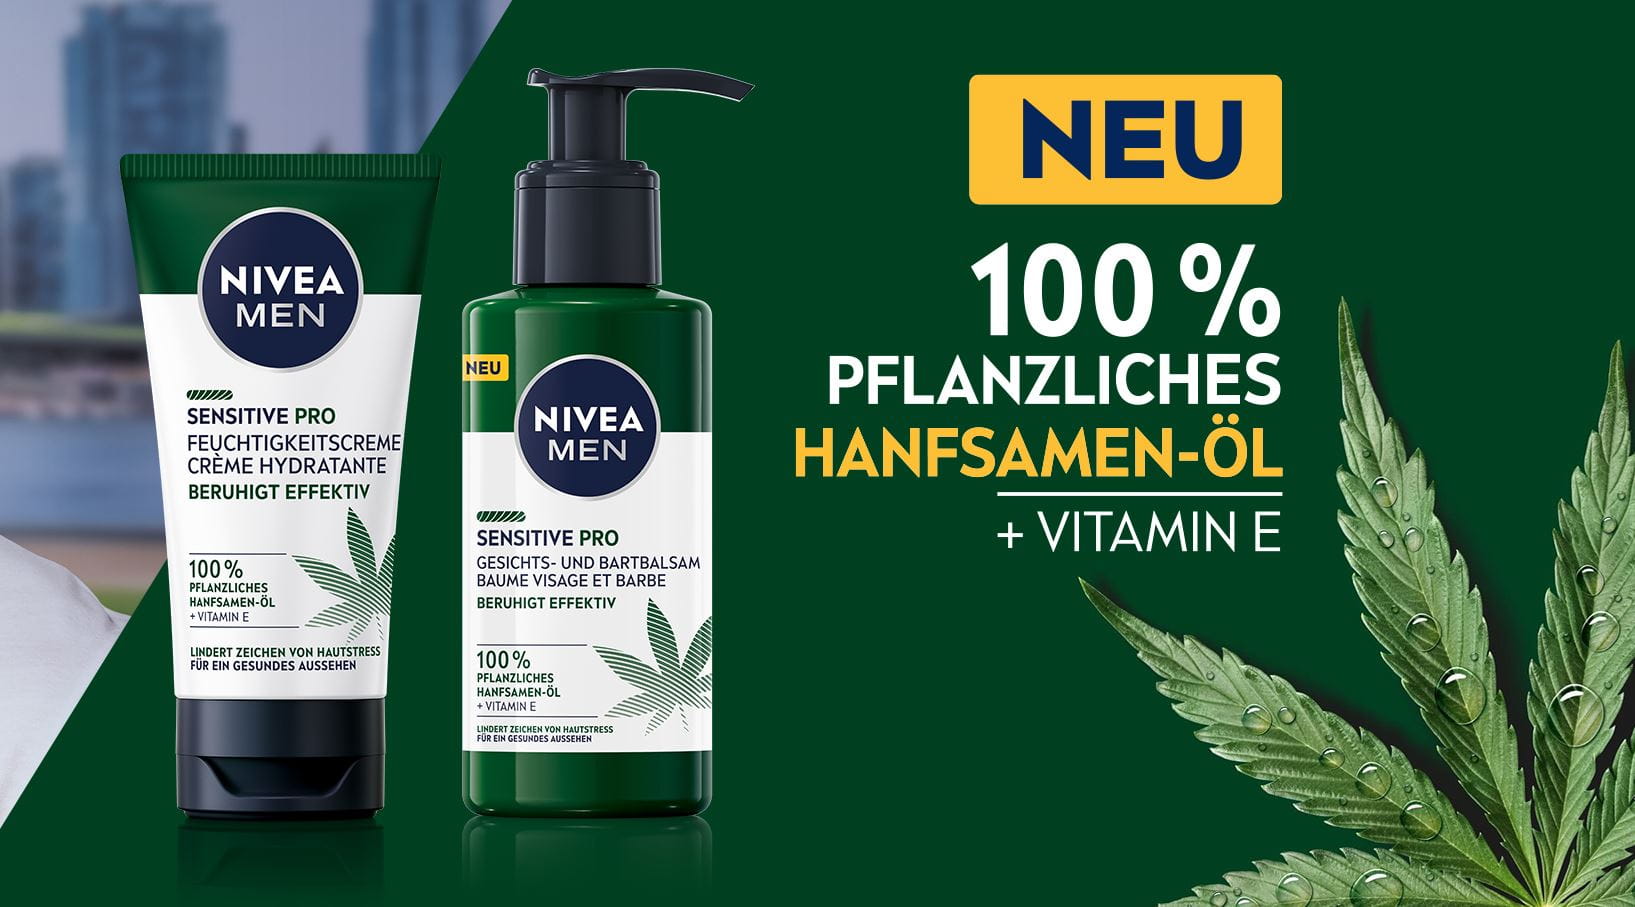 NIVEA MEN Sensitive Pro mit 100% pflanzlichem Handsamen-Öl und Vitamin E